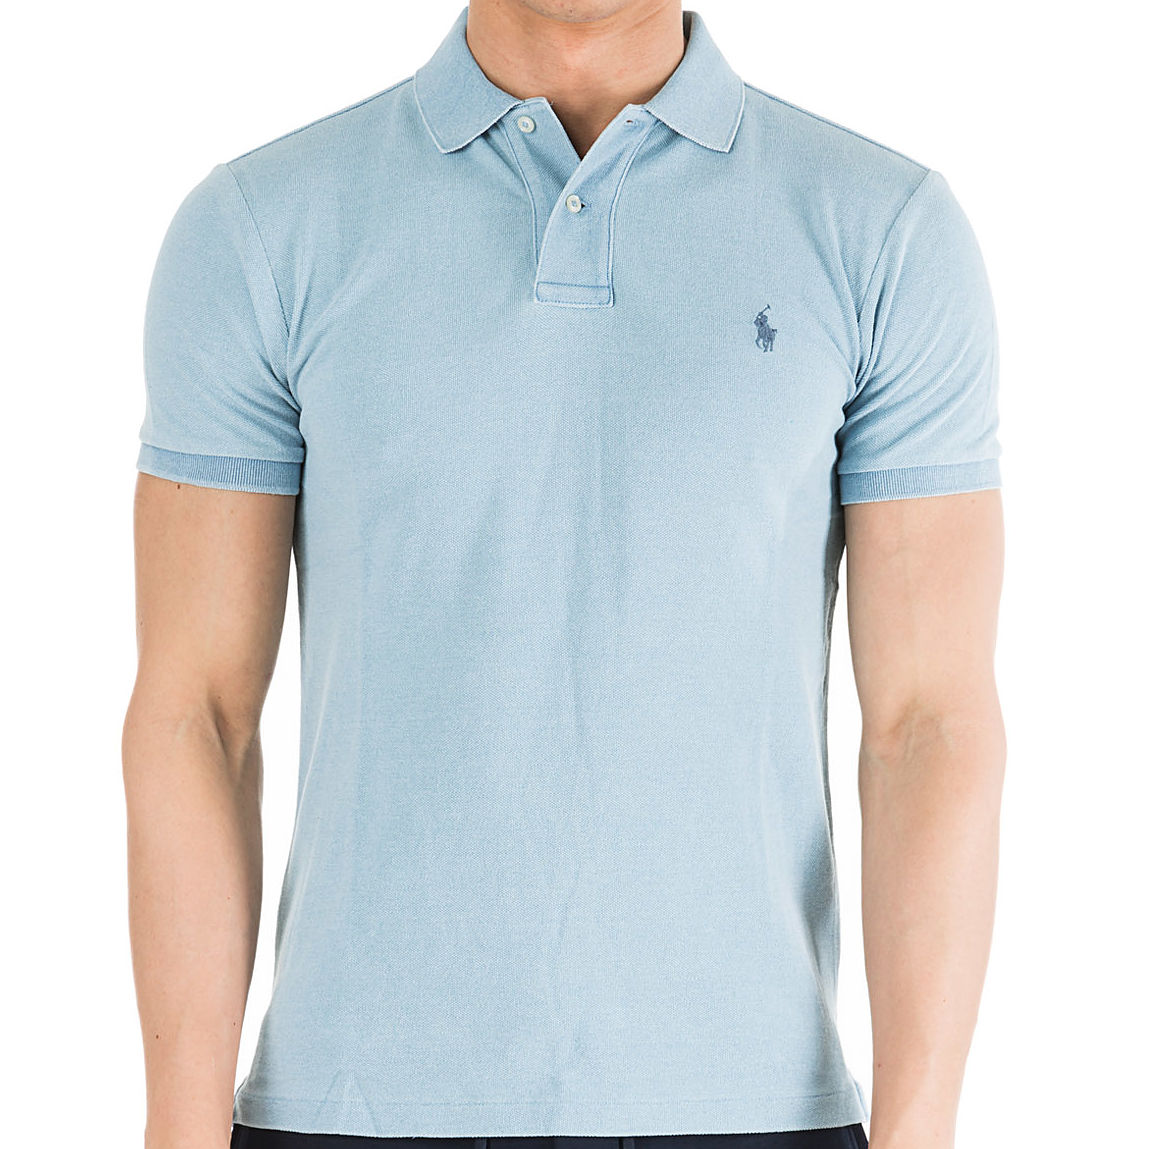 Ralph Lauren POLO by Ralph Lauren Mens Light Blue Cotton Slim Fit Polo Shirt $98